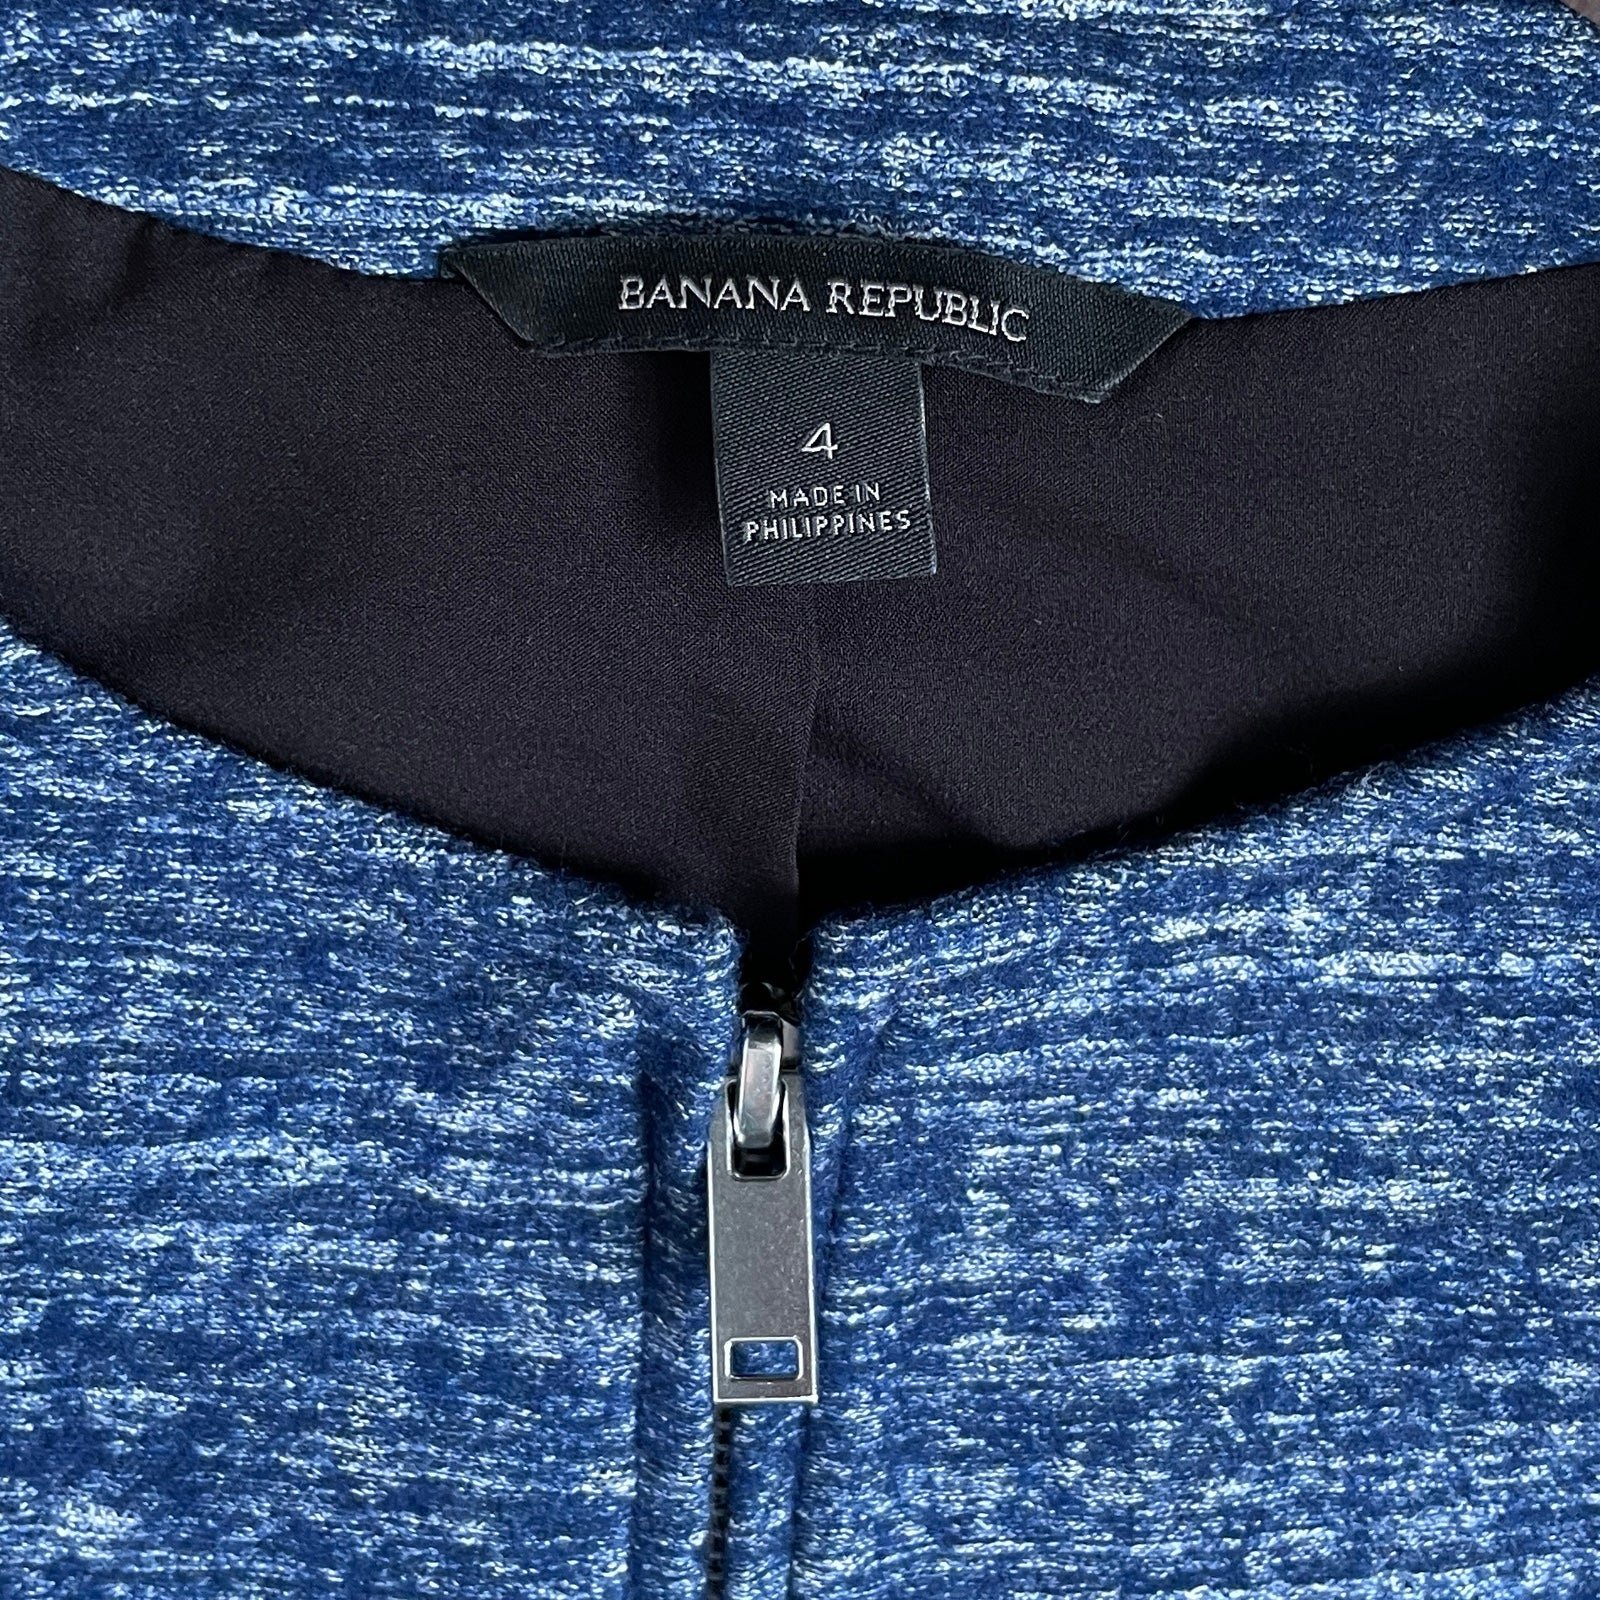 Beautiful Banana Republic Peplum Blazer Blue Space Dye Wool Blend Zip Front Women’s 4 n1NtYw52m New Style